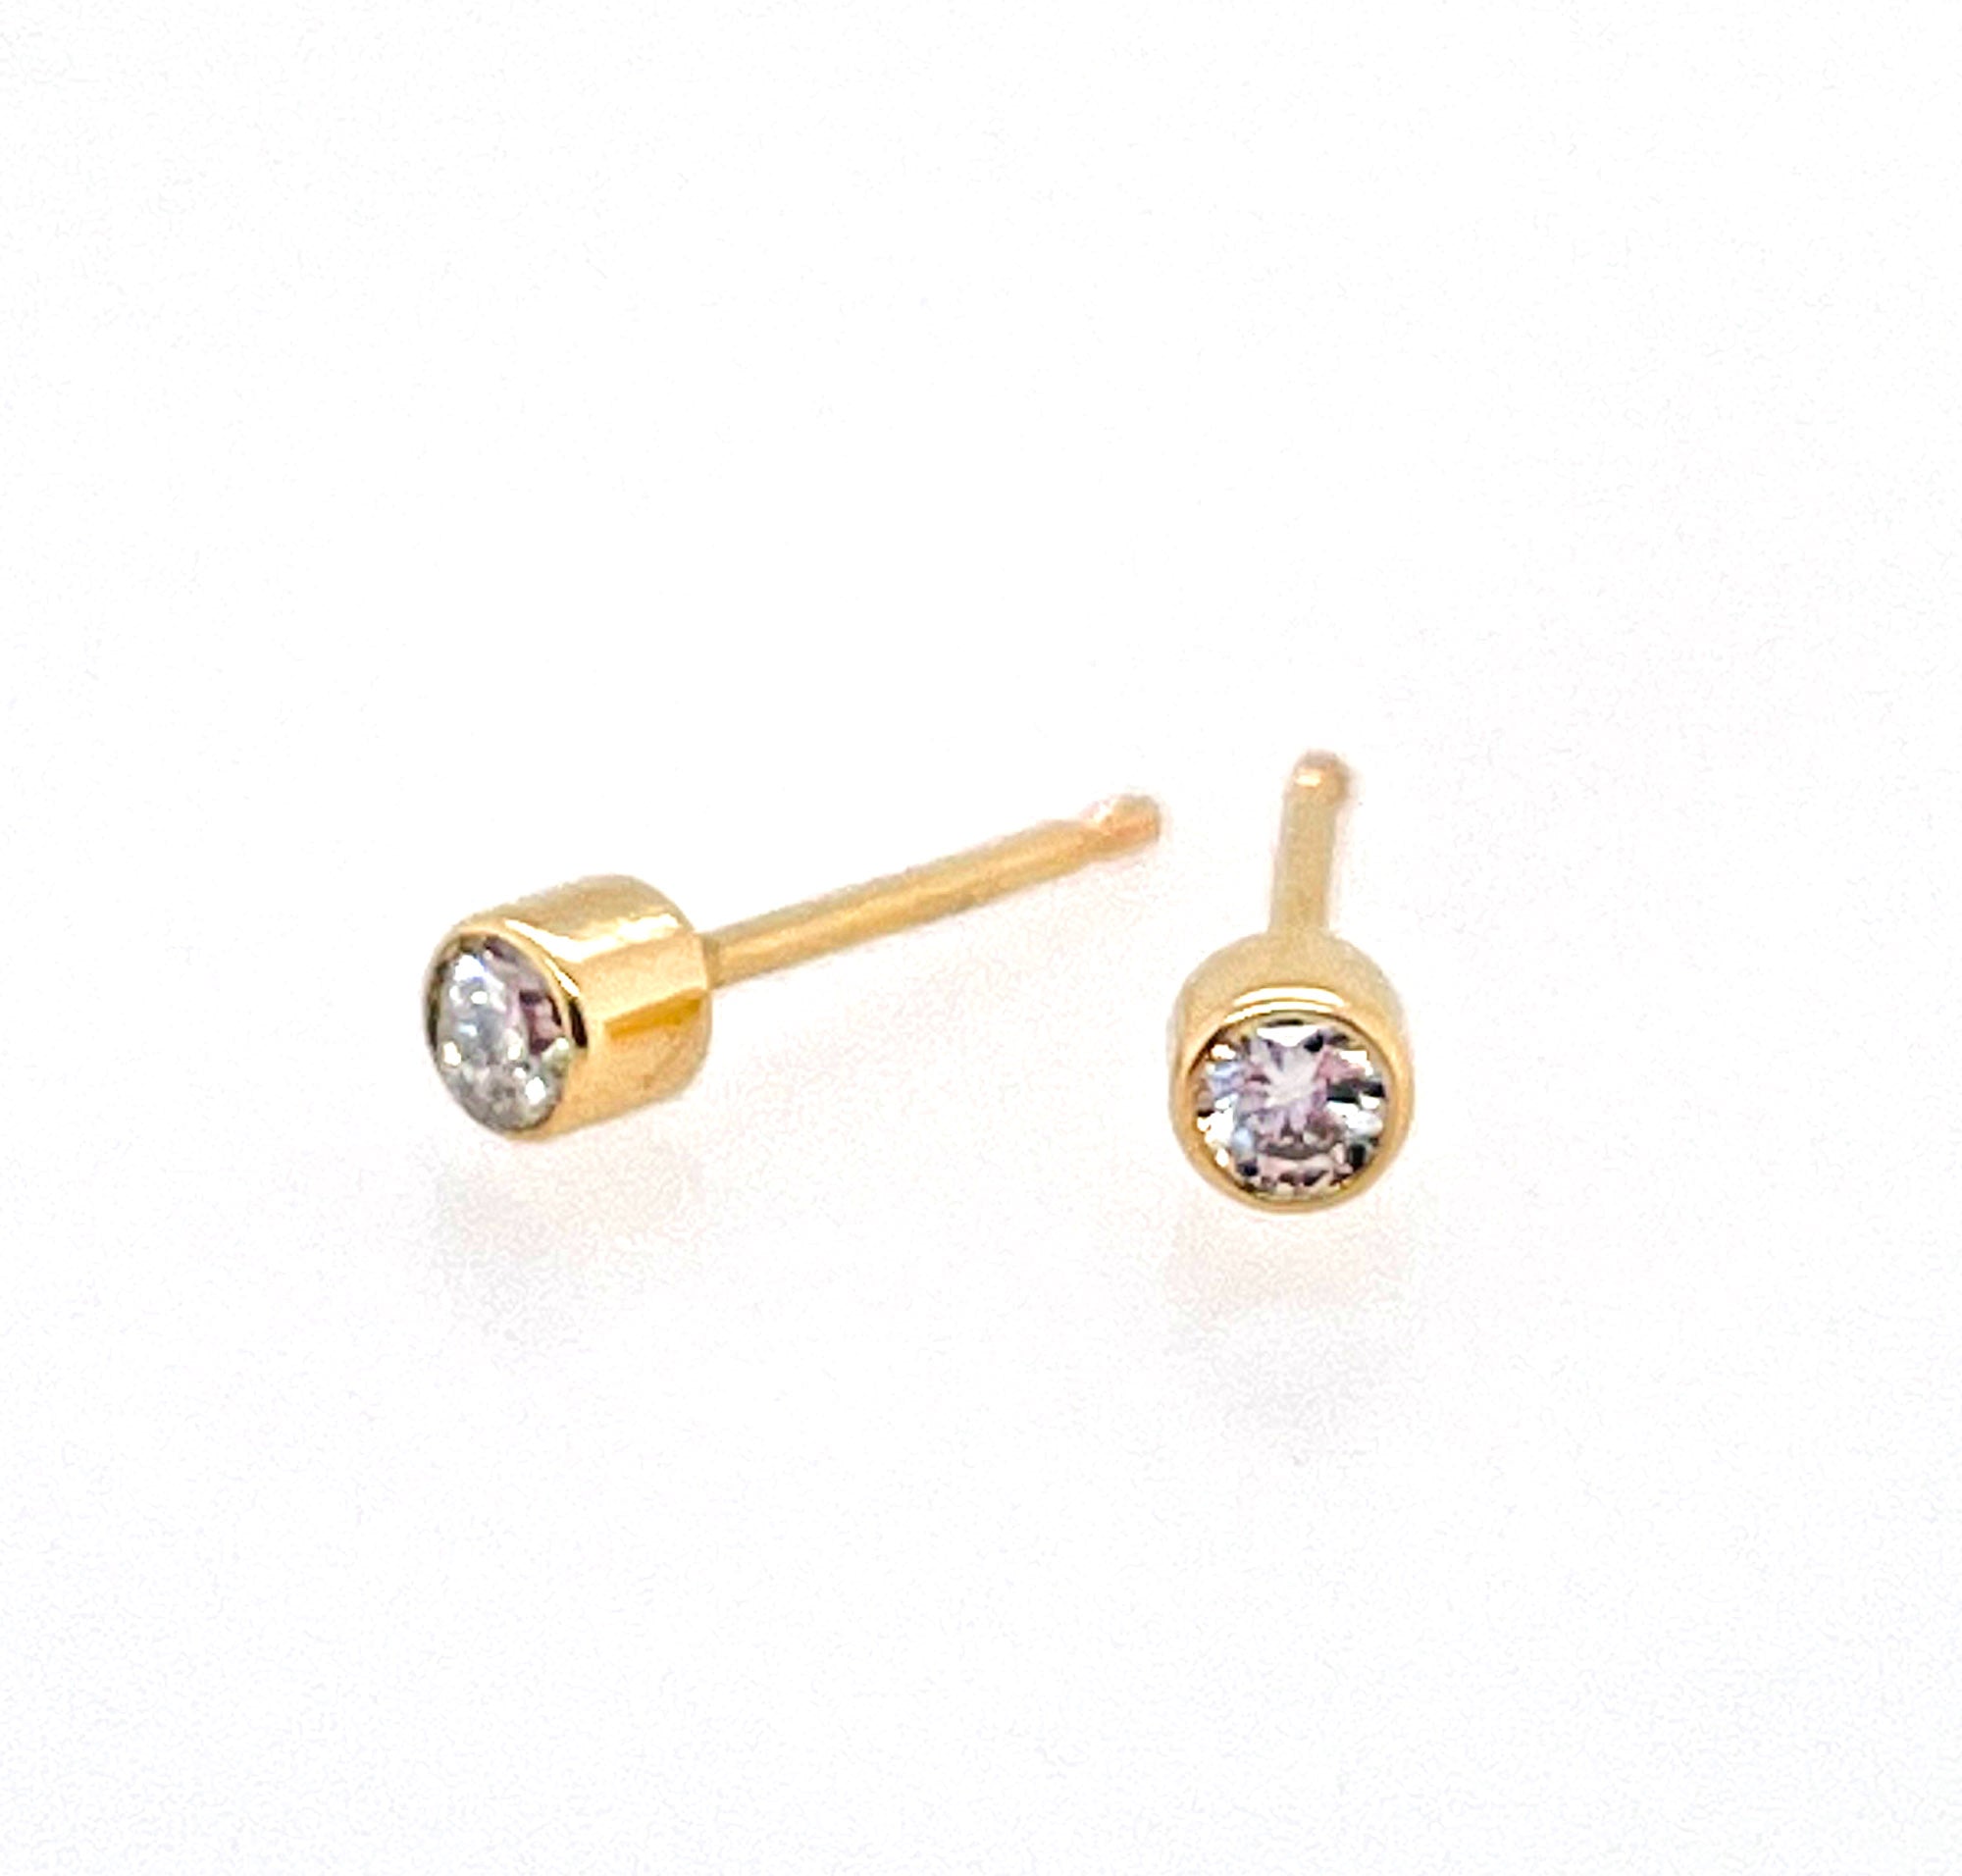 Diamond Earrings, Solid 14k Gold Diamond Stud Earrings, Small Natural Diamond Bezel Studs, Conflict-Free Diamond Jewelry